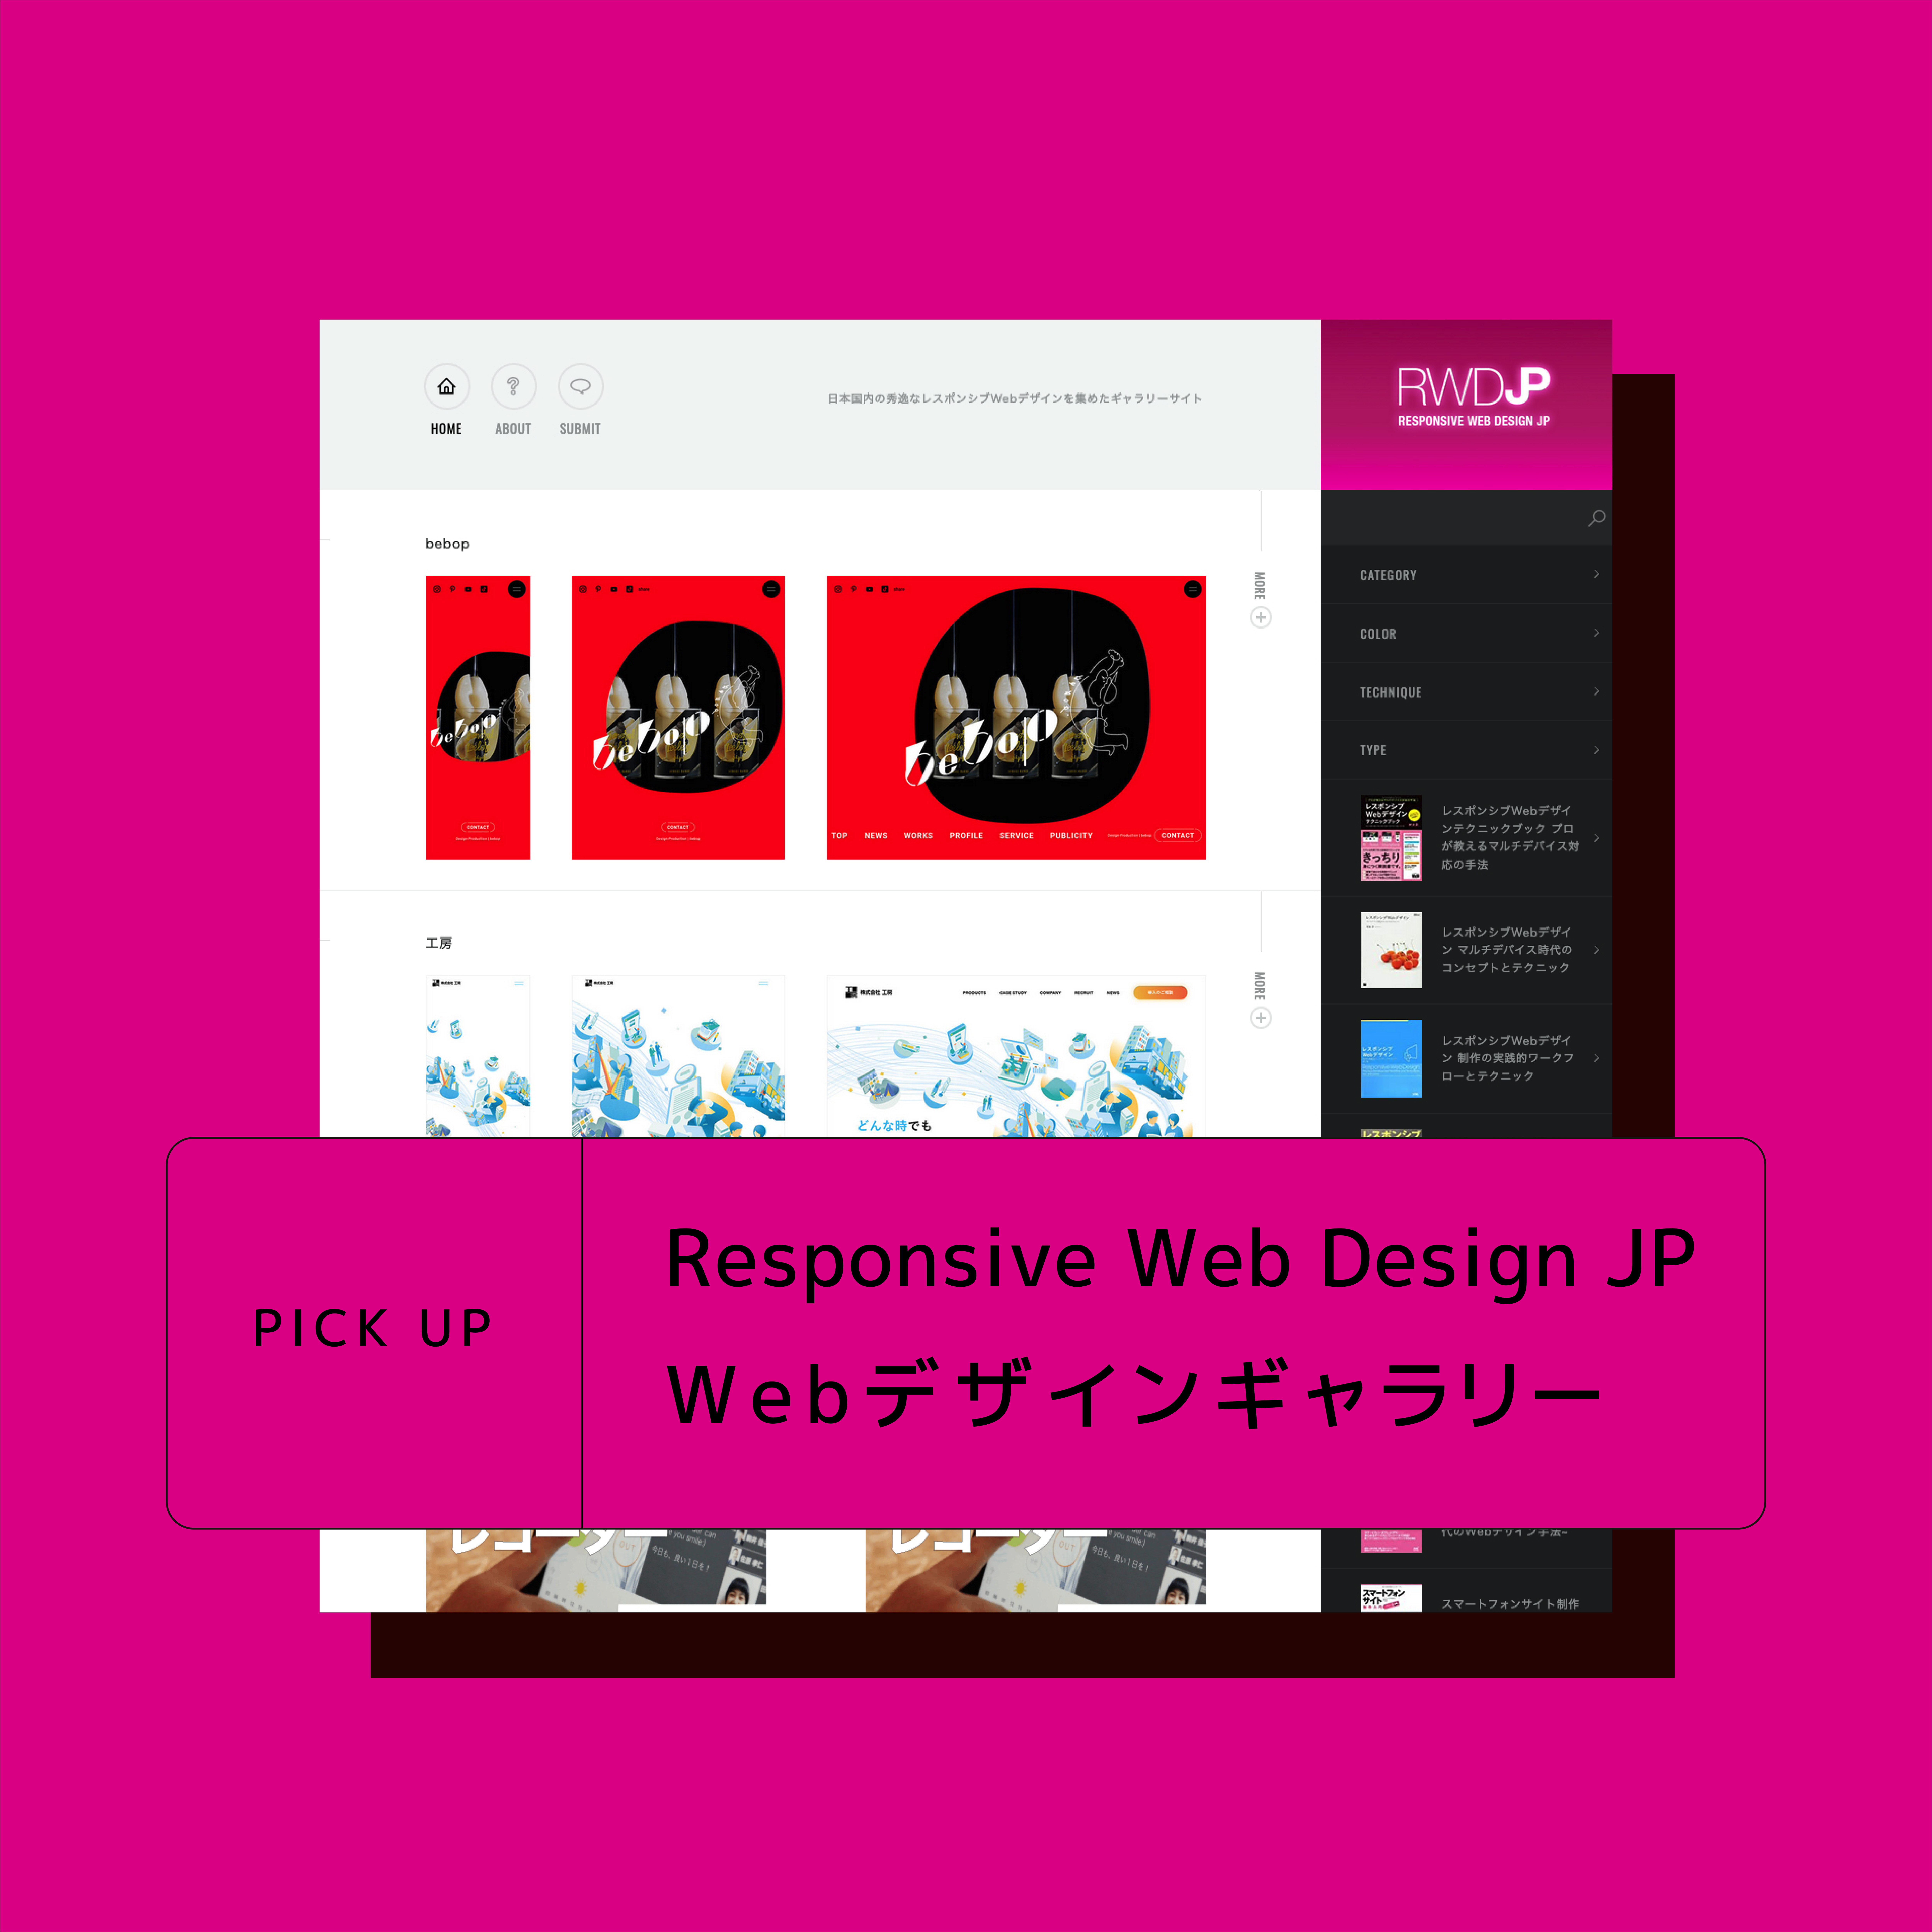 Webデザインギャラリー Responsive Web Design JPさんにご紹介いただきました